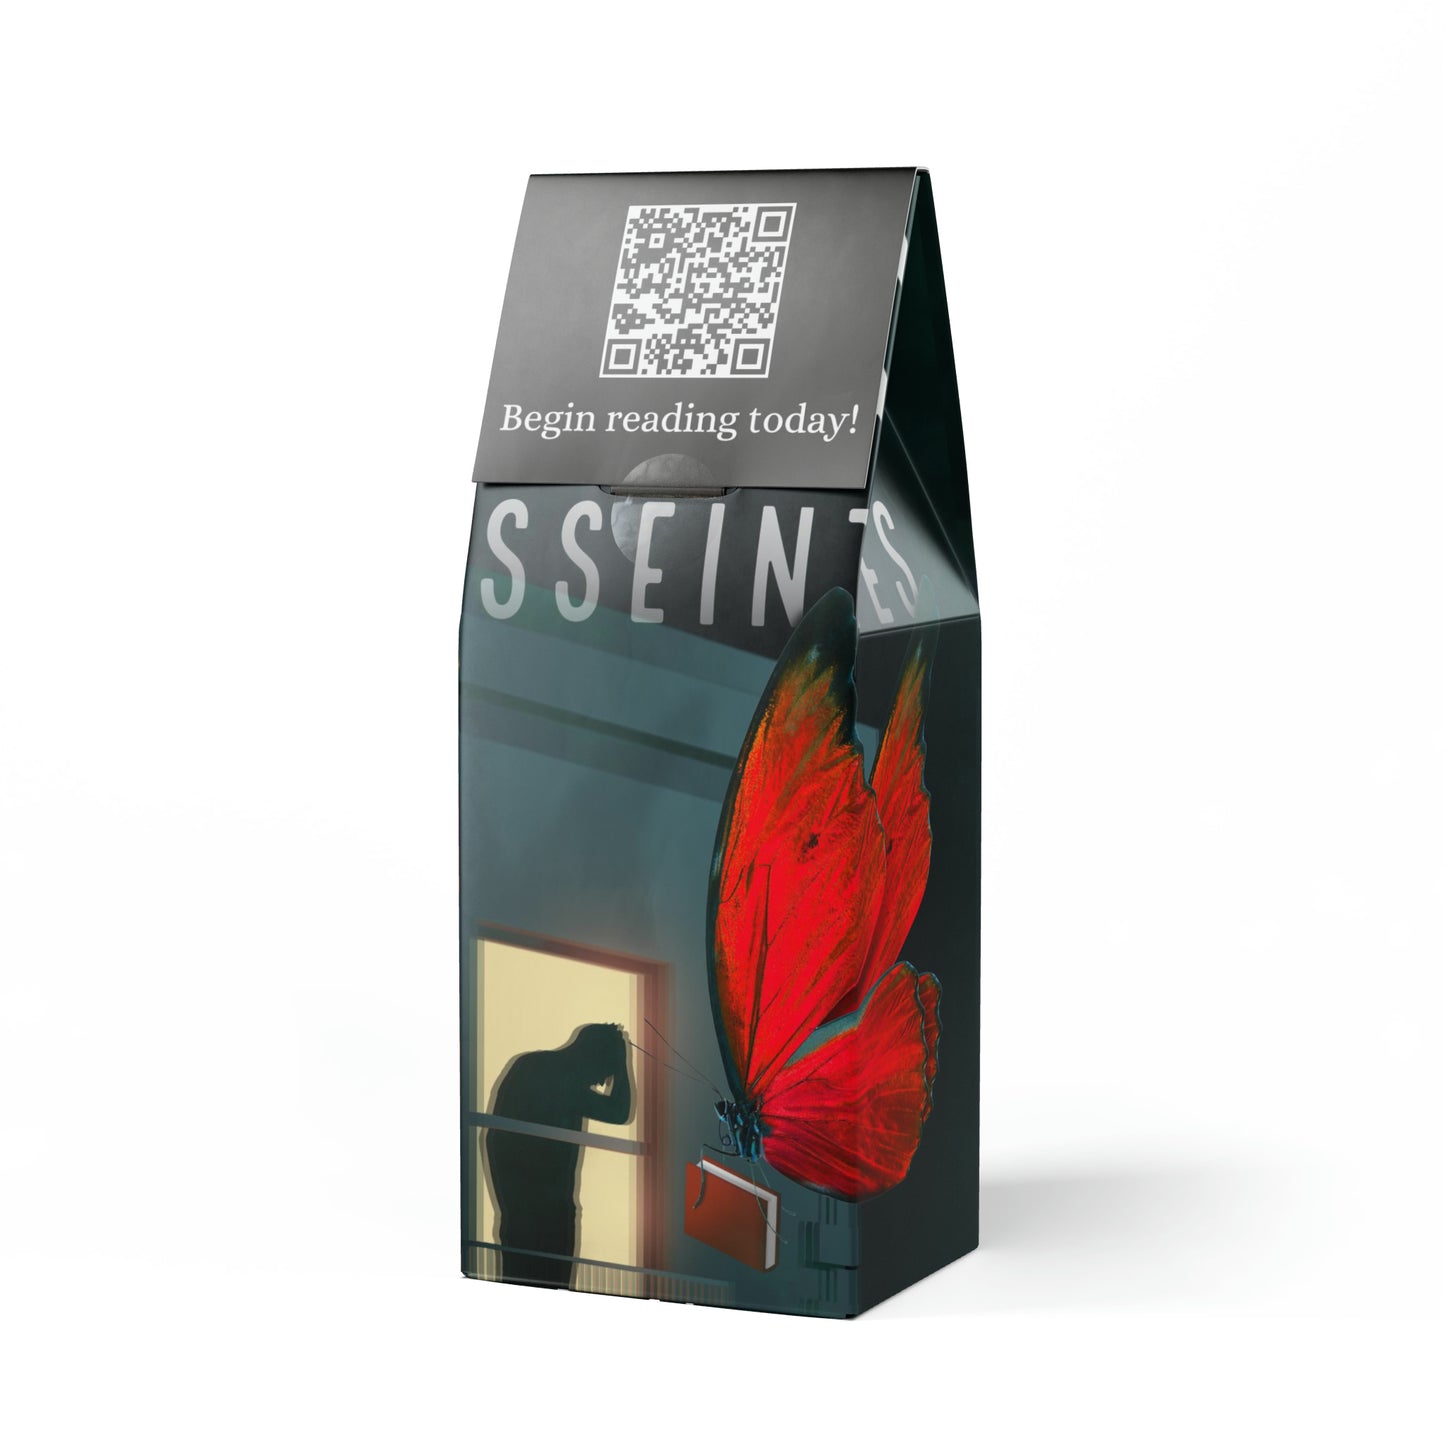 Healing Brian Esseintes - Broken Top Coffee Blend (Medium Roast)